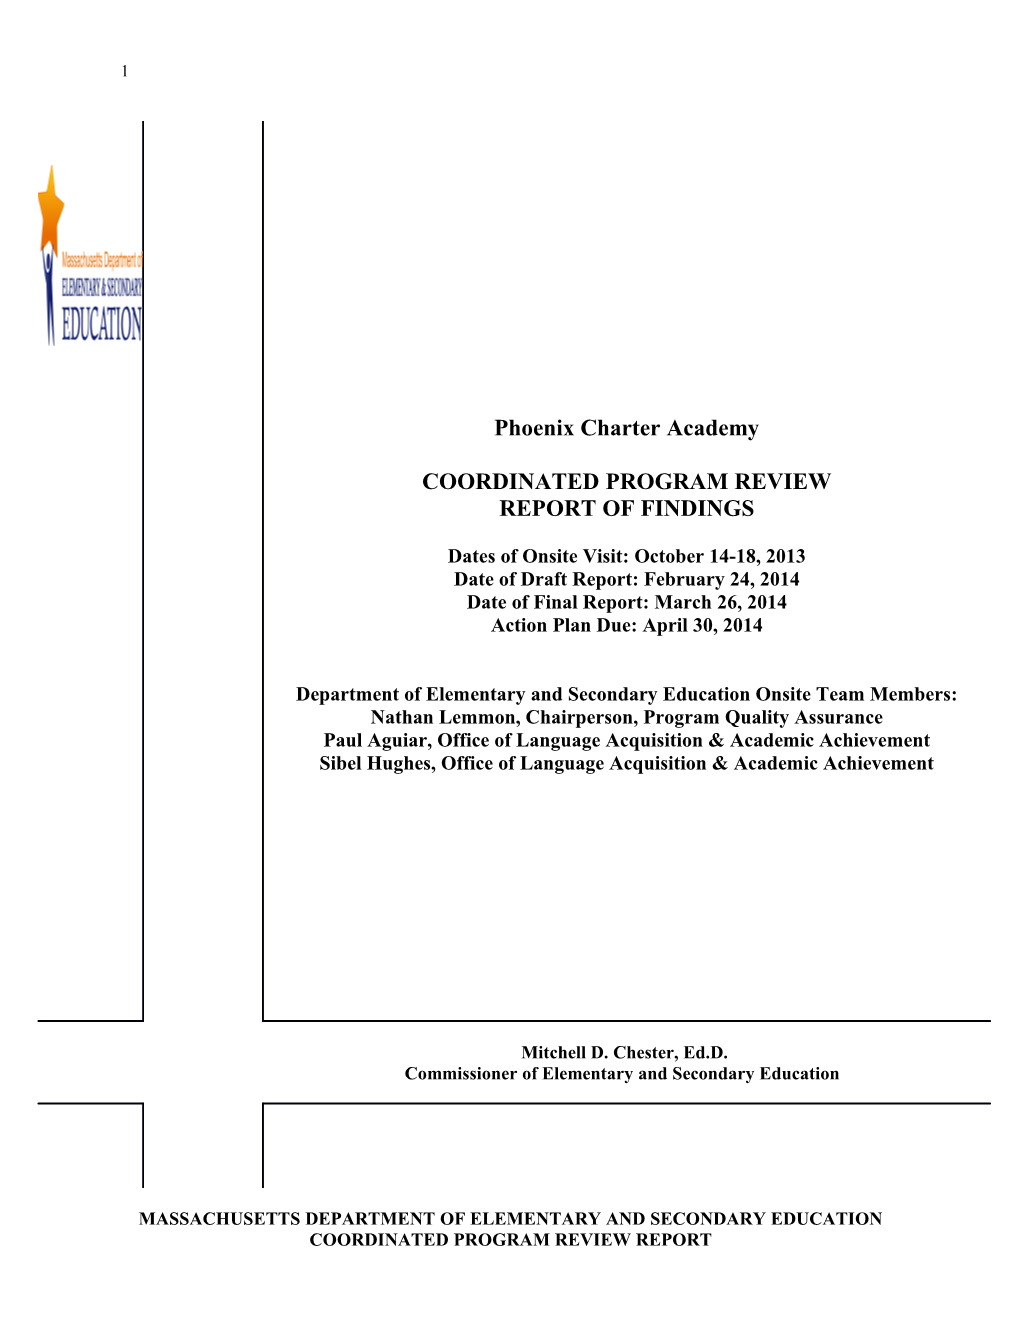 Phoenix Charter Academy CPR Final Report 2014